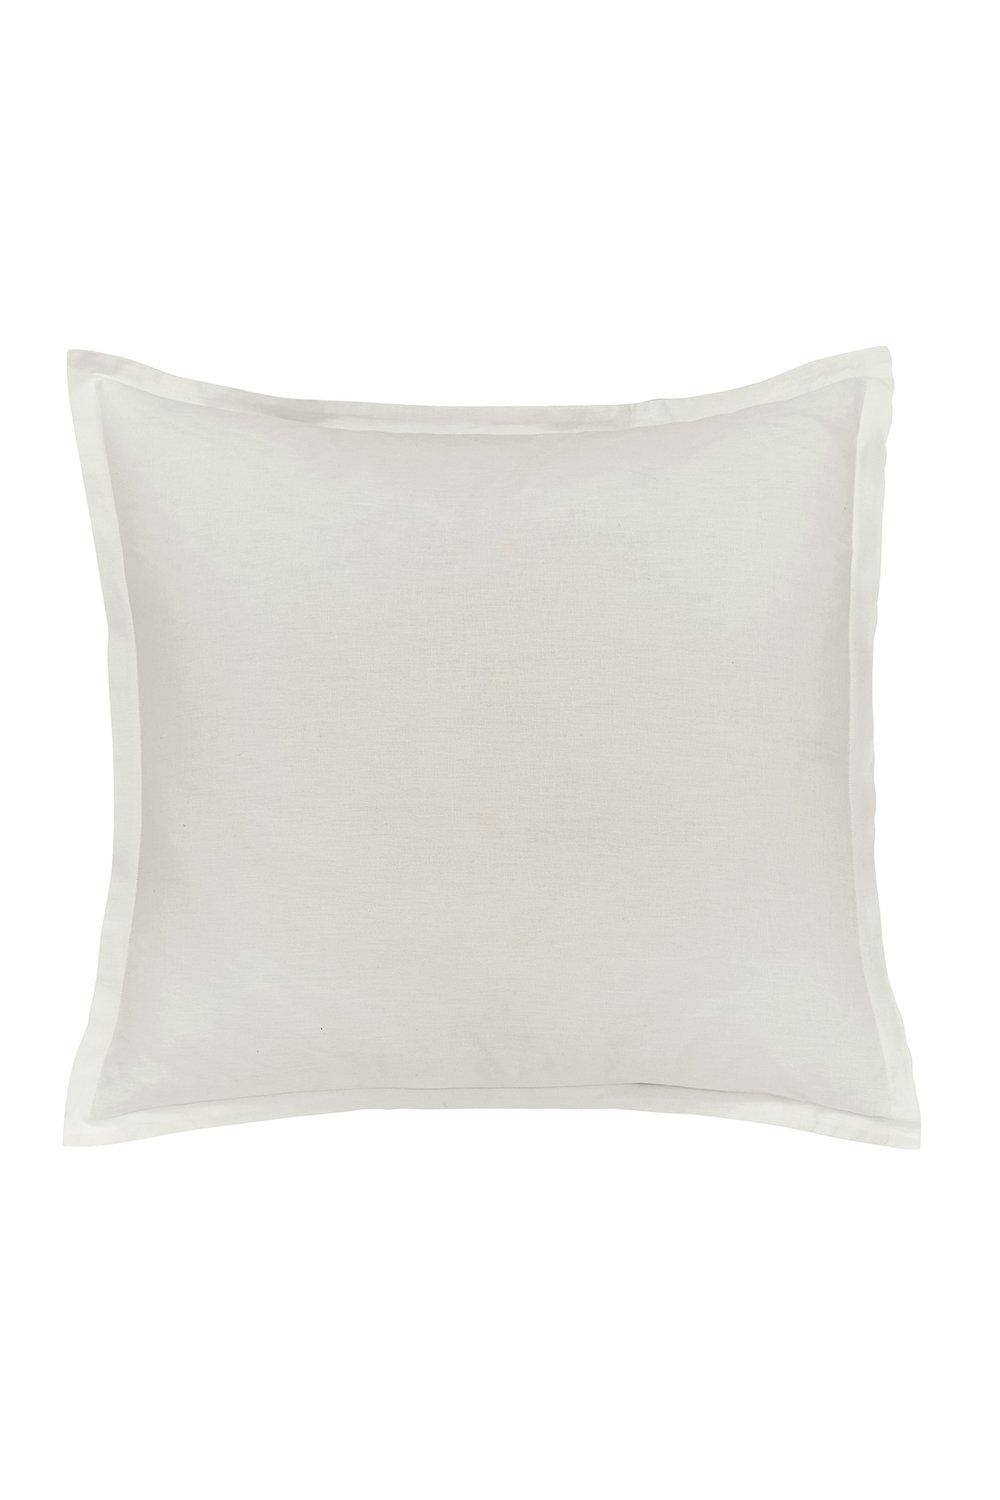 William Morris Pure Linen Cotton Sham Pillowcase, Silver